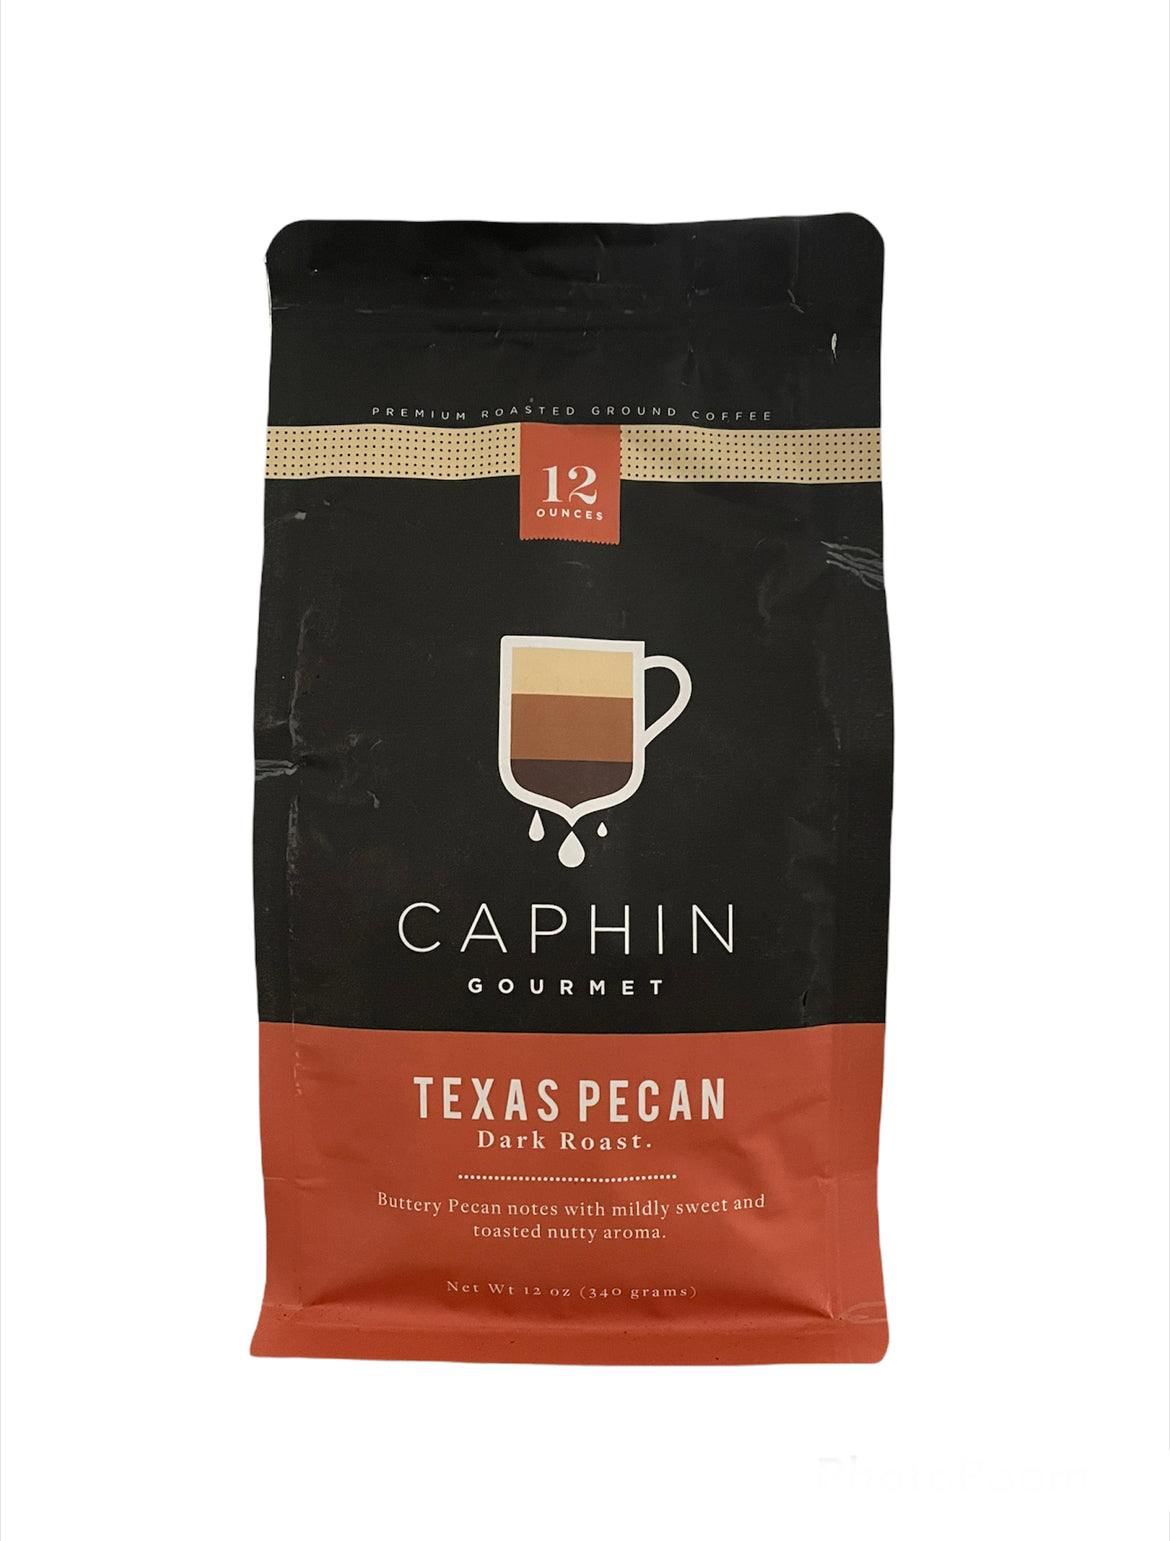 Texas Pecan Coffee Grounds 12 oz